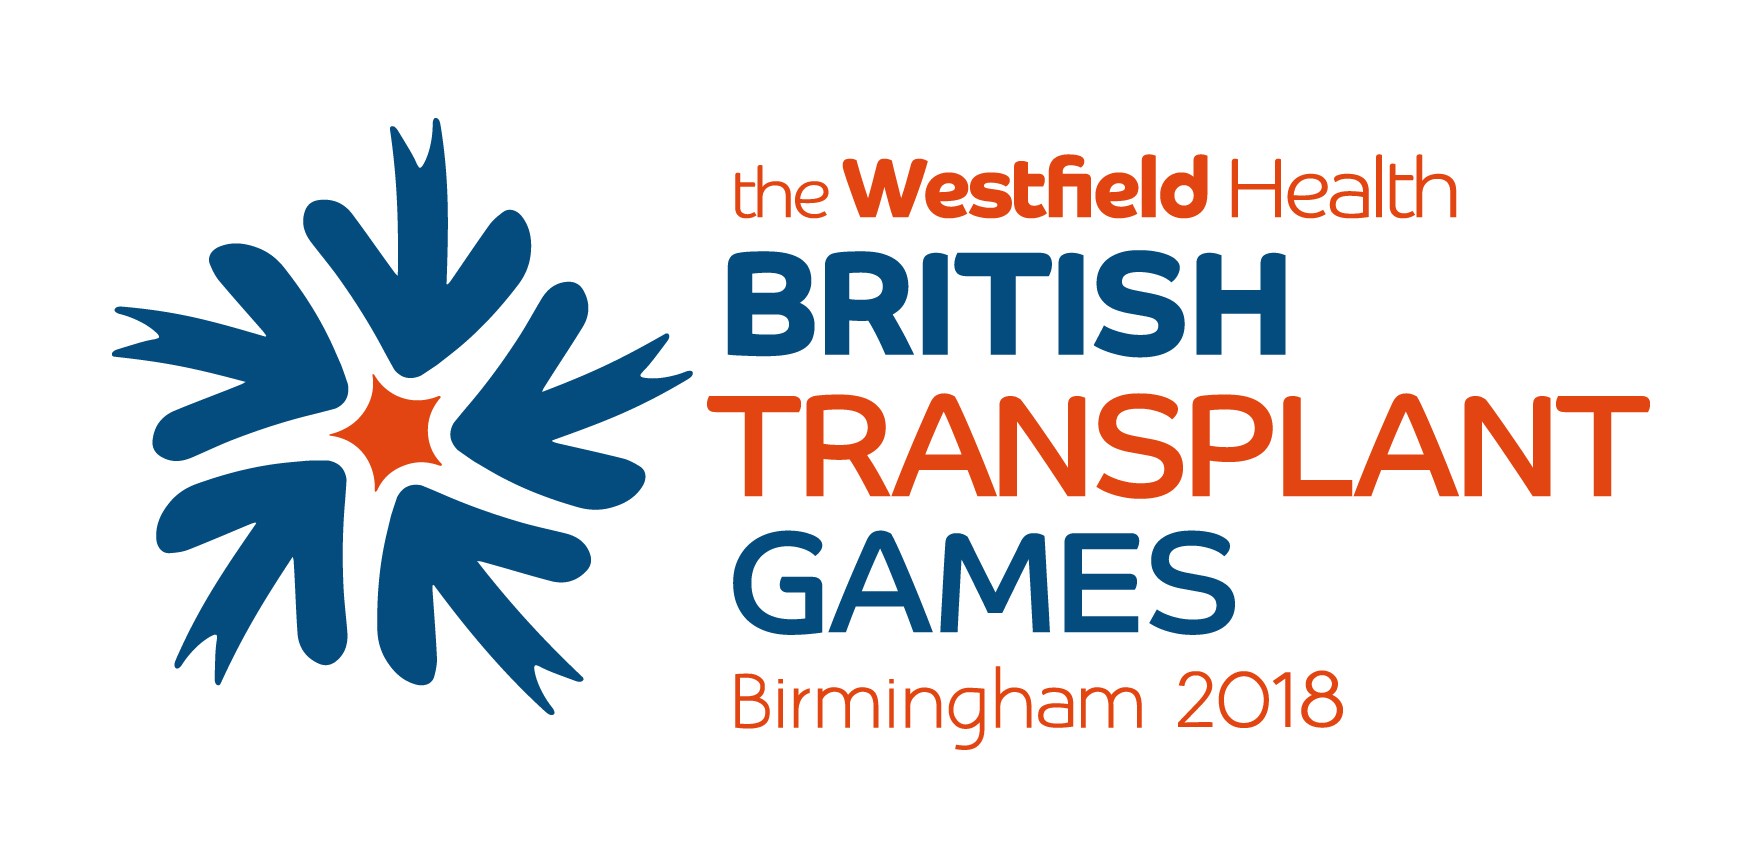 The Westfield Health British Transplant Games 2018 logo